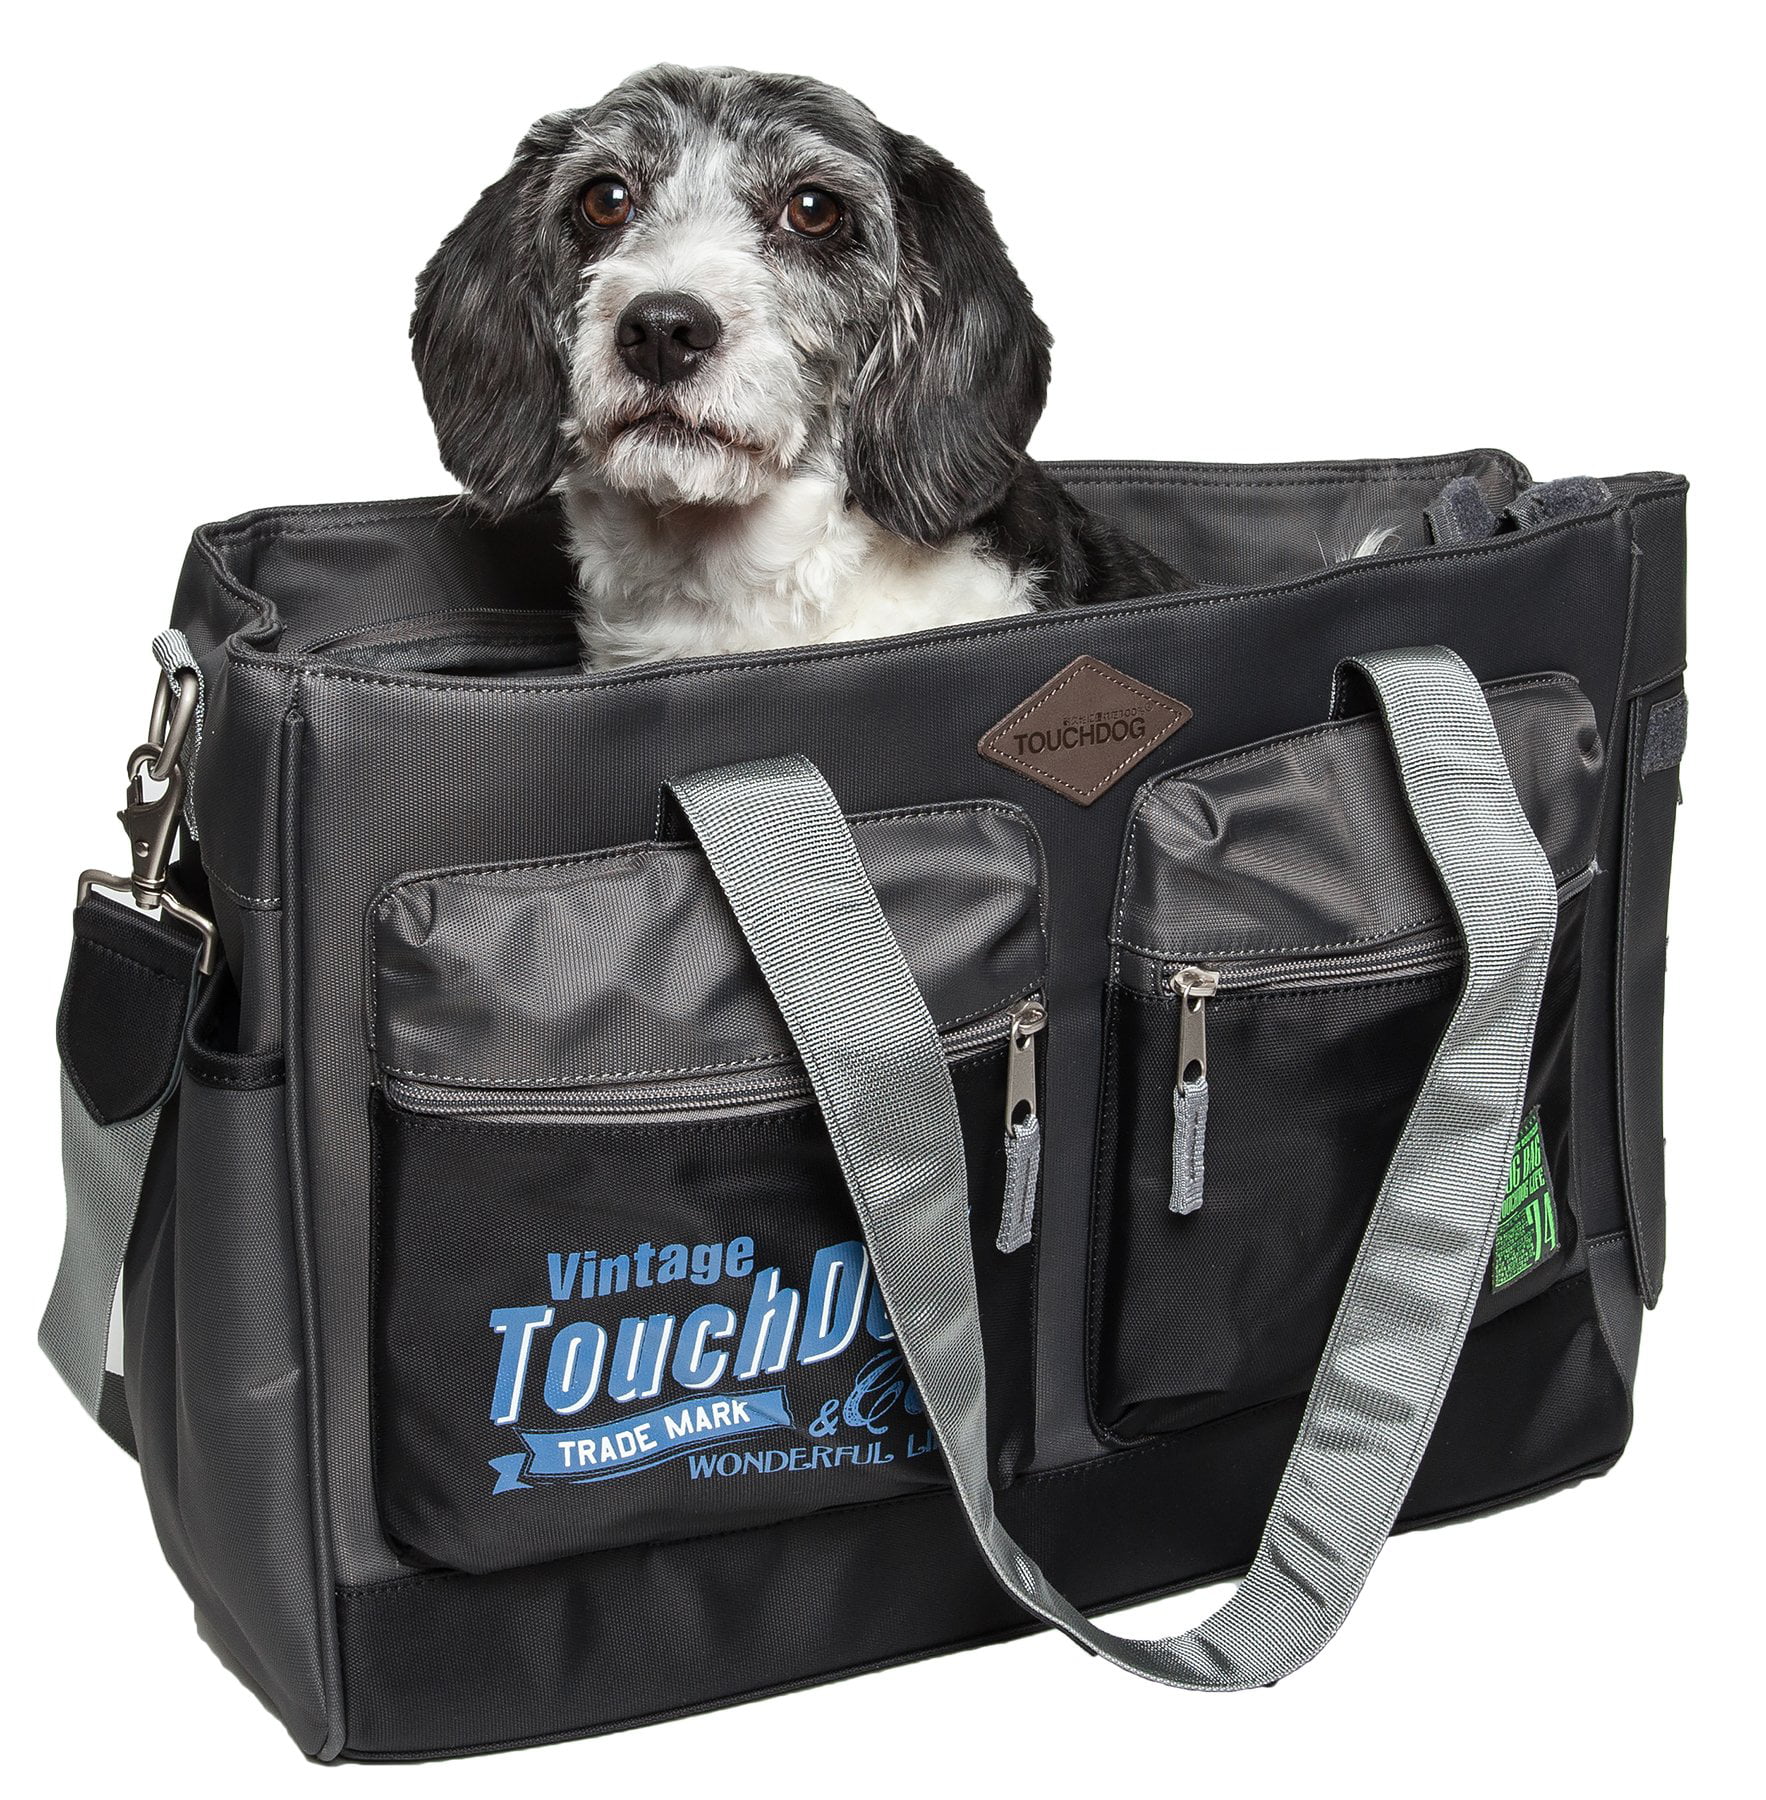 Touchdog Glide Airline Approved Water-Resistant Travel Pet Dog Carrier Bag